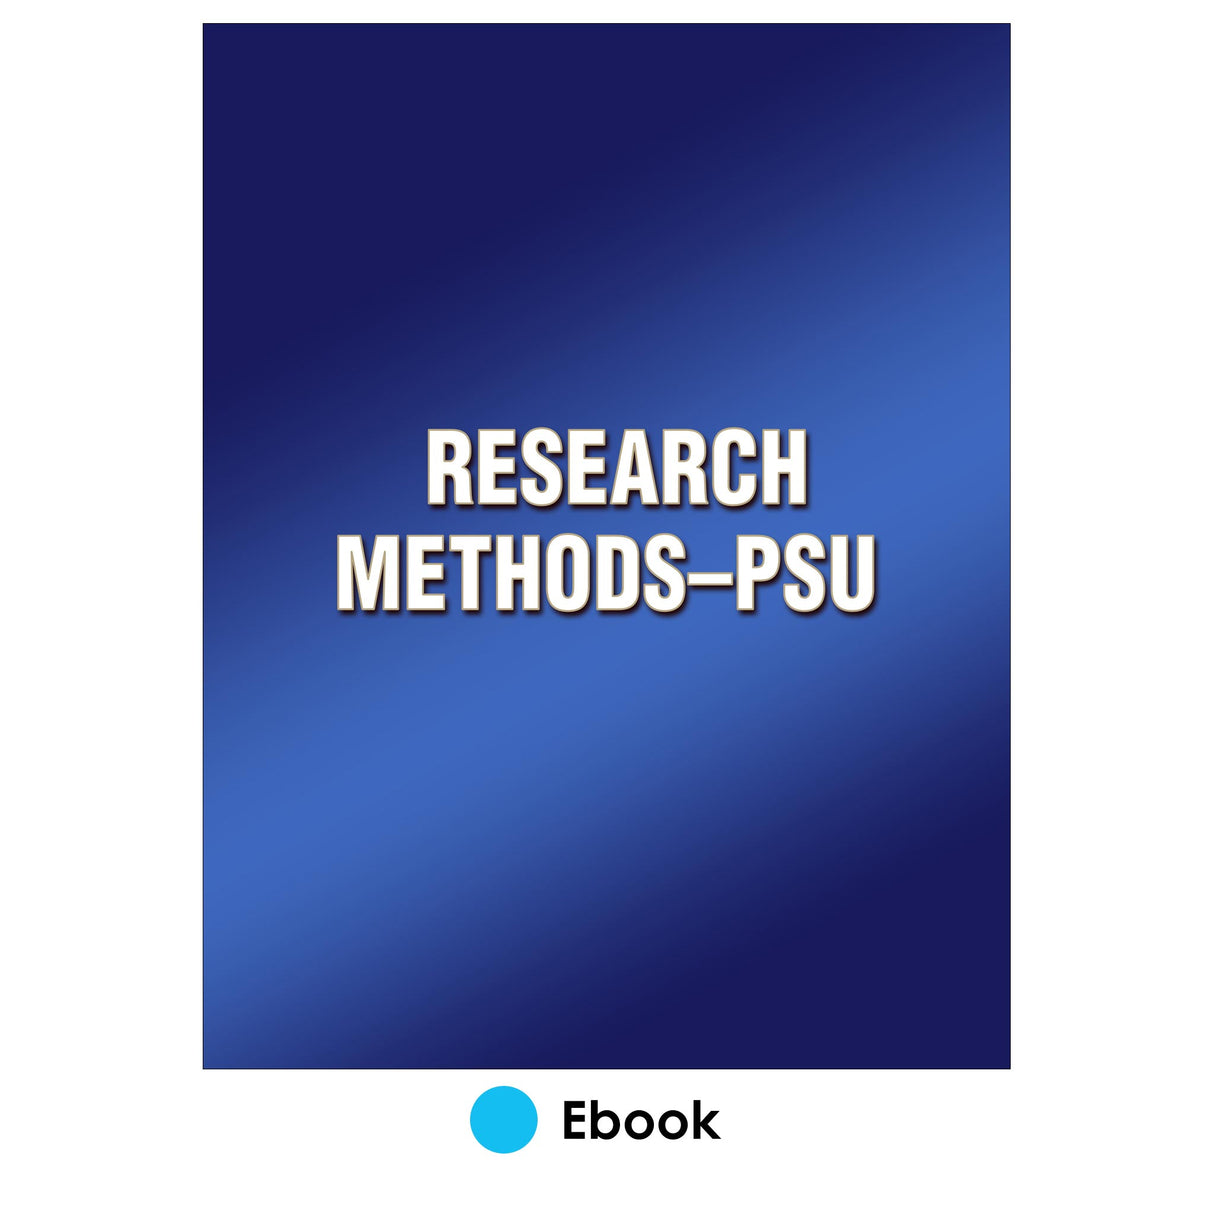 Research Methods-PSU